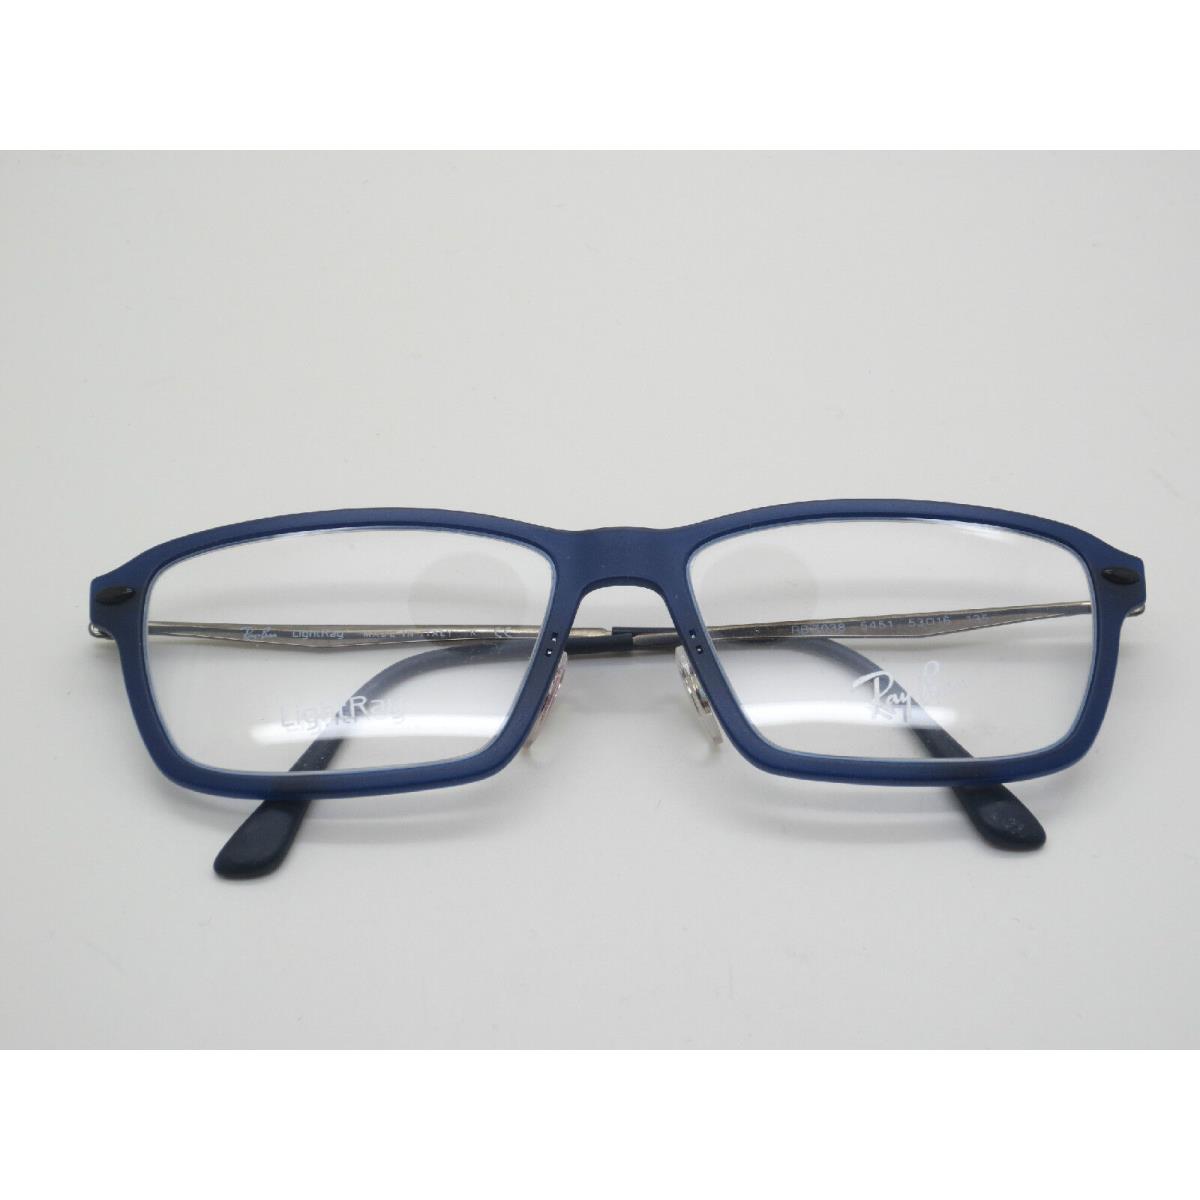 Ray-Ban eyeglasses  - Matte Navy Blue Frame 0